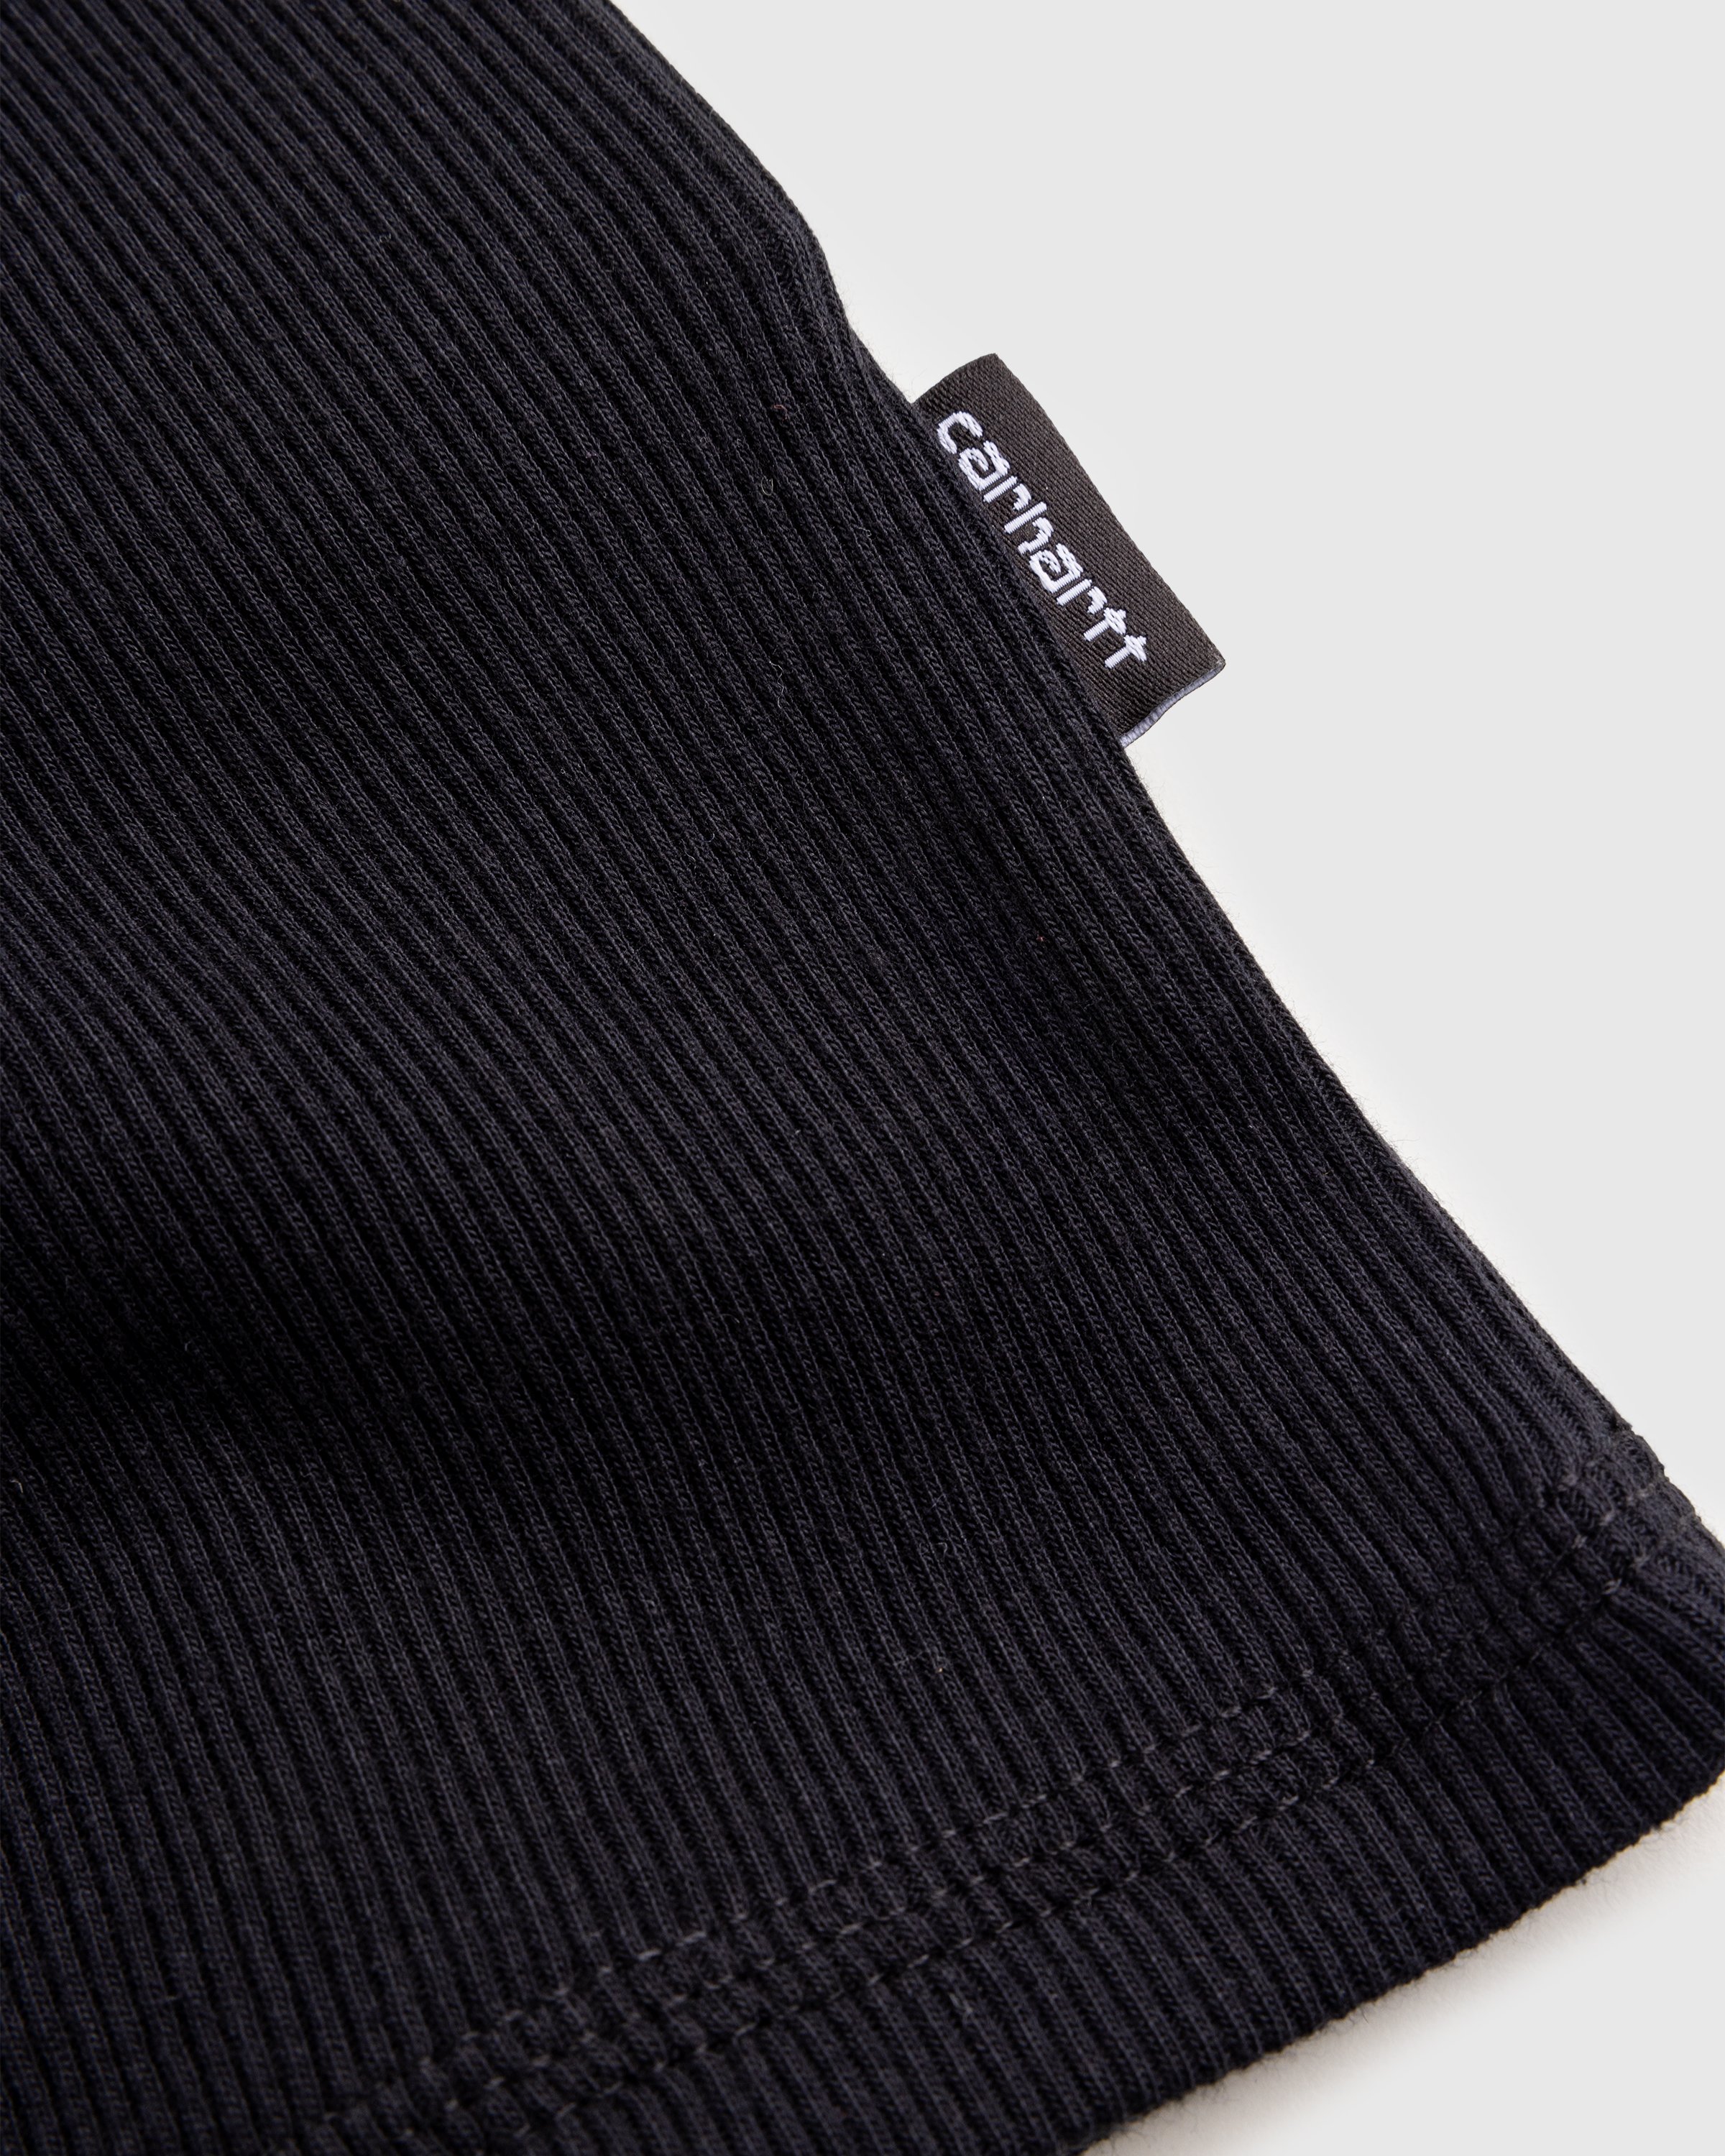 Carhartt WIP – A-Shirt Two-Pack Black | Highsnobiety Shop